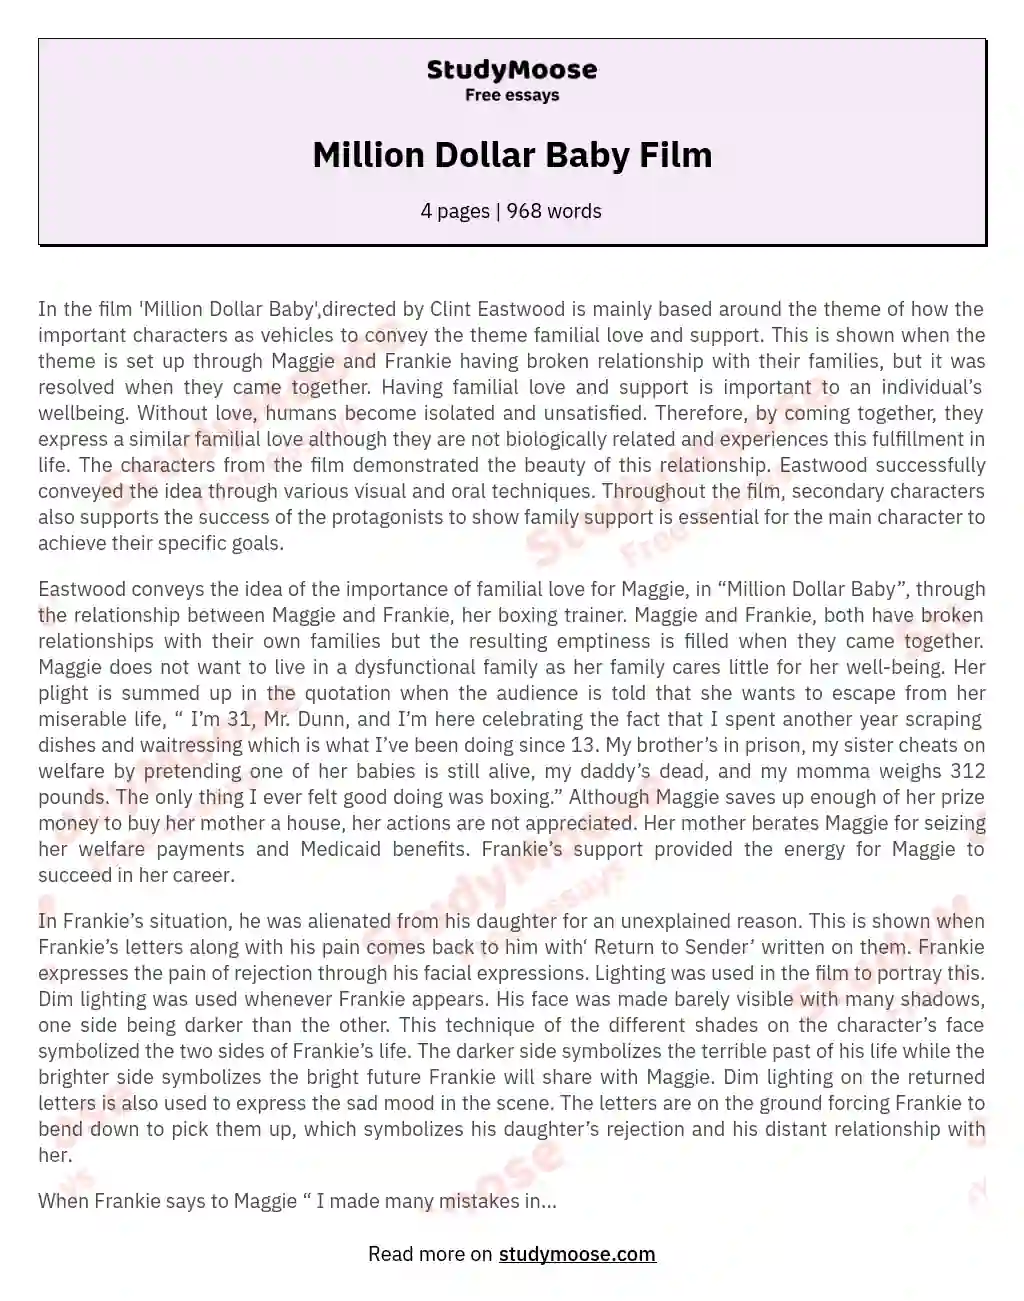 Million Dollar Baby Film essay